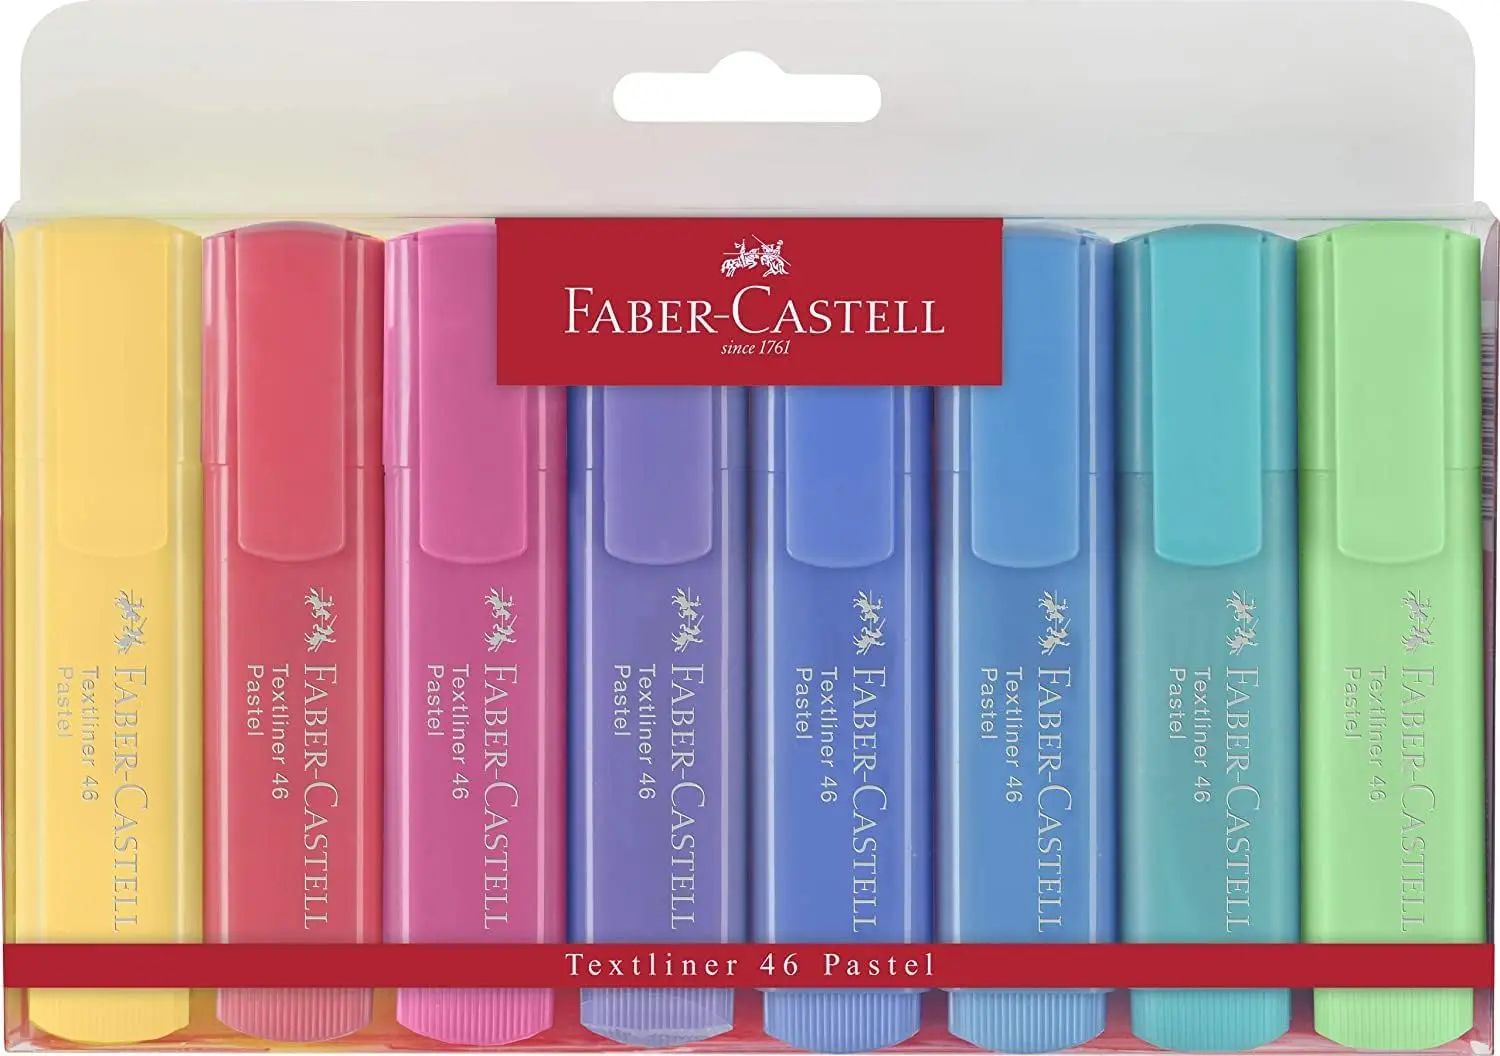 Faber-Castell Textliner 46 Pastel Pack de 8 Marcadores Fluorescentes - Punta Biselada - Trazo entre 